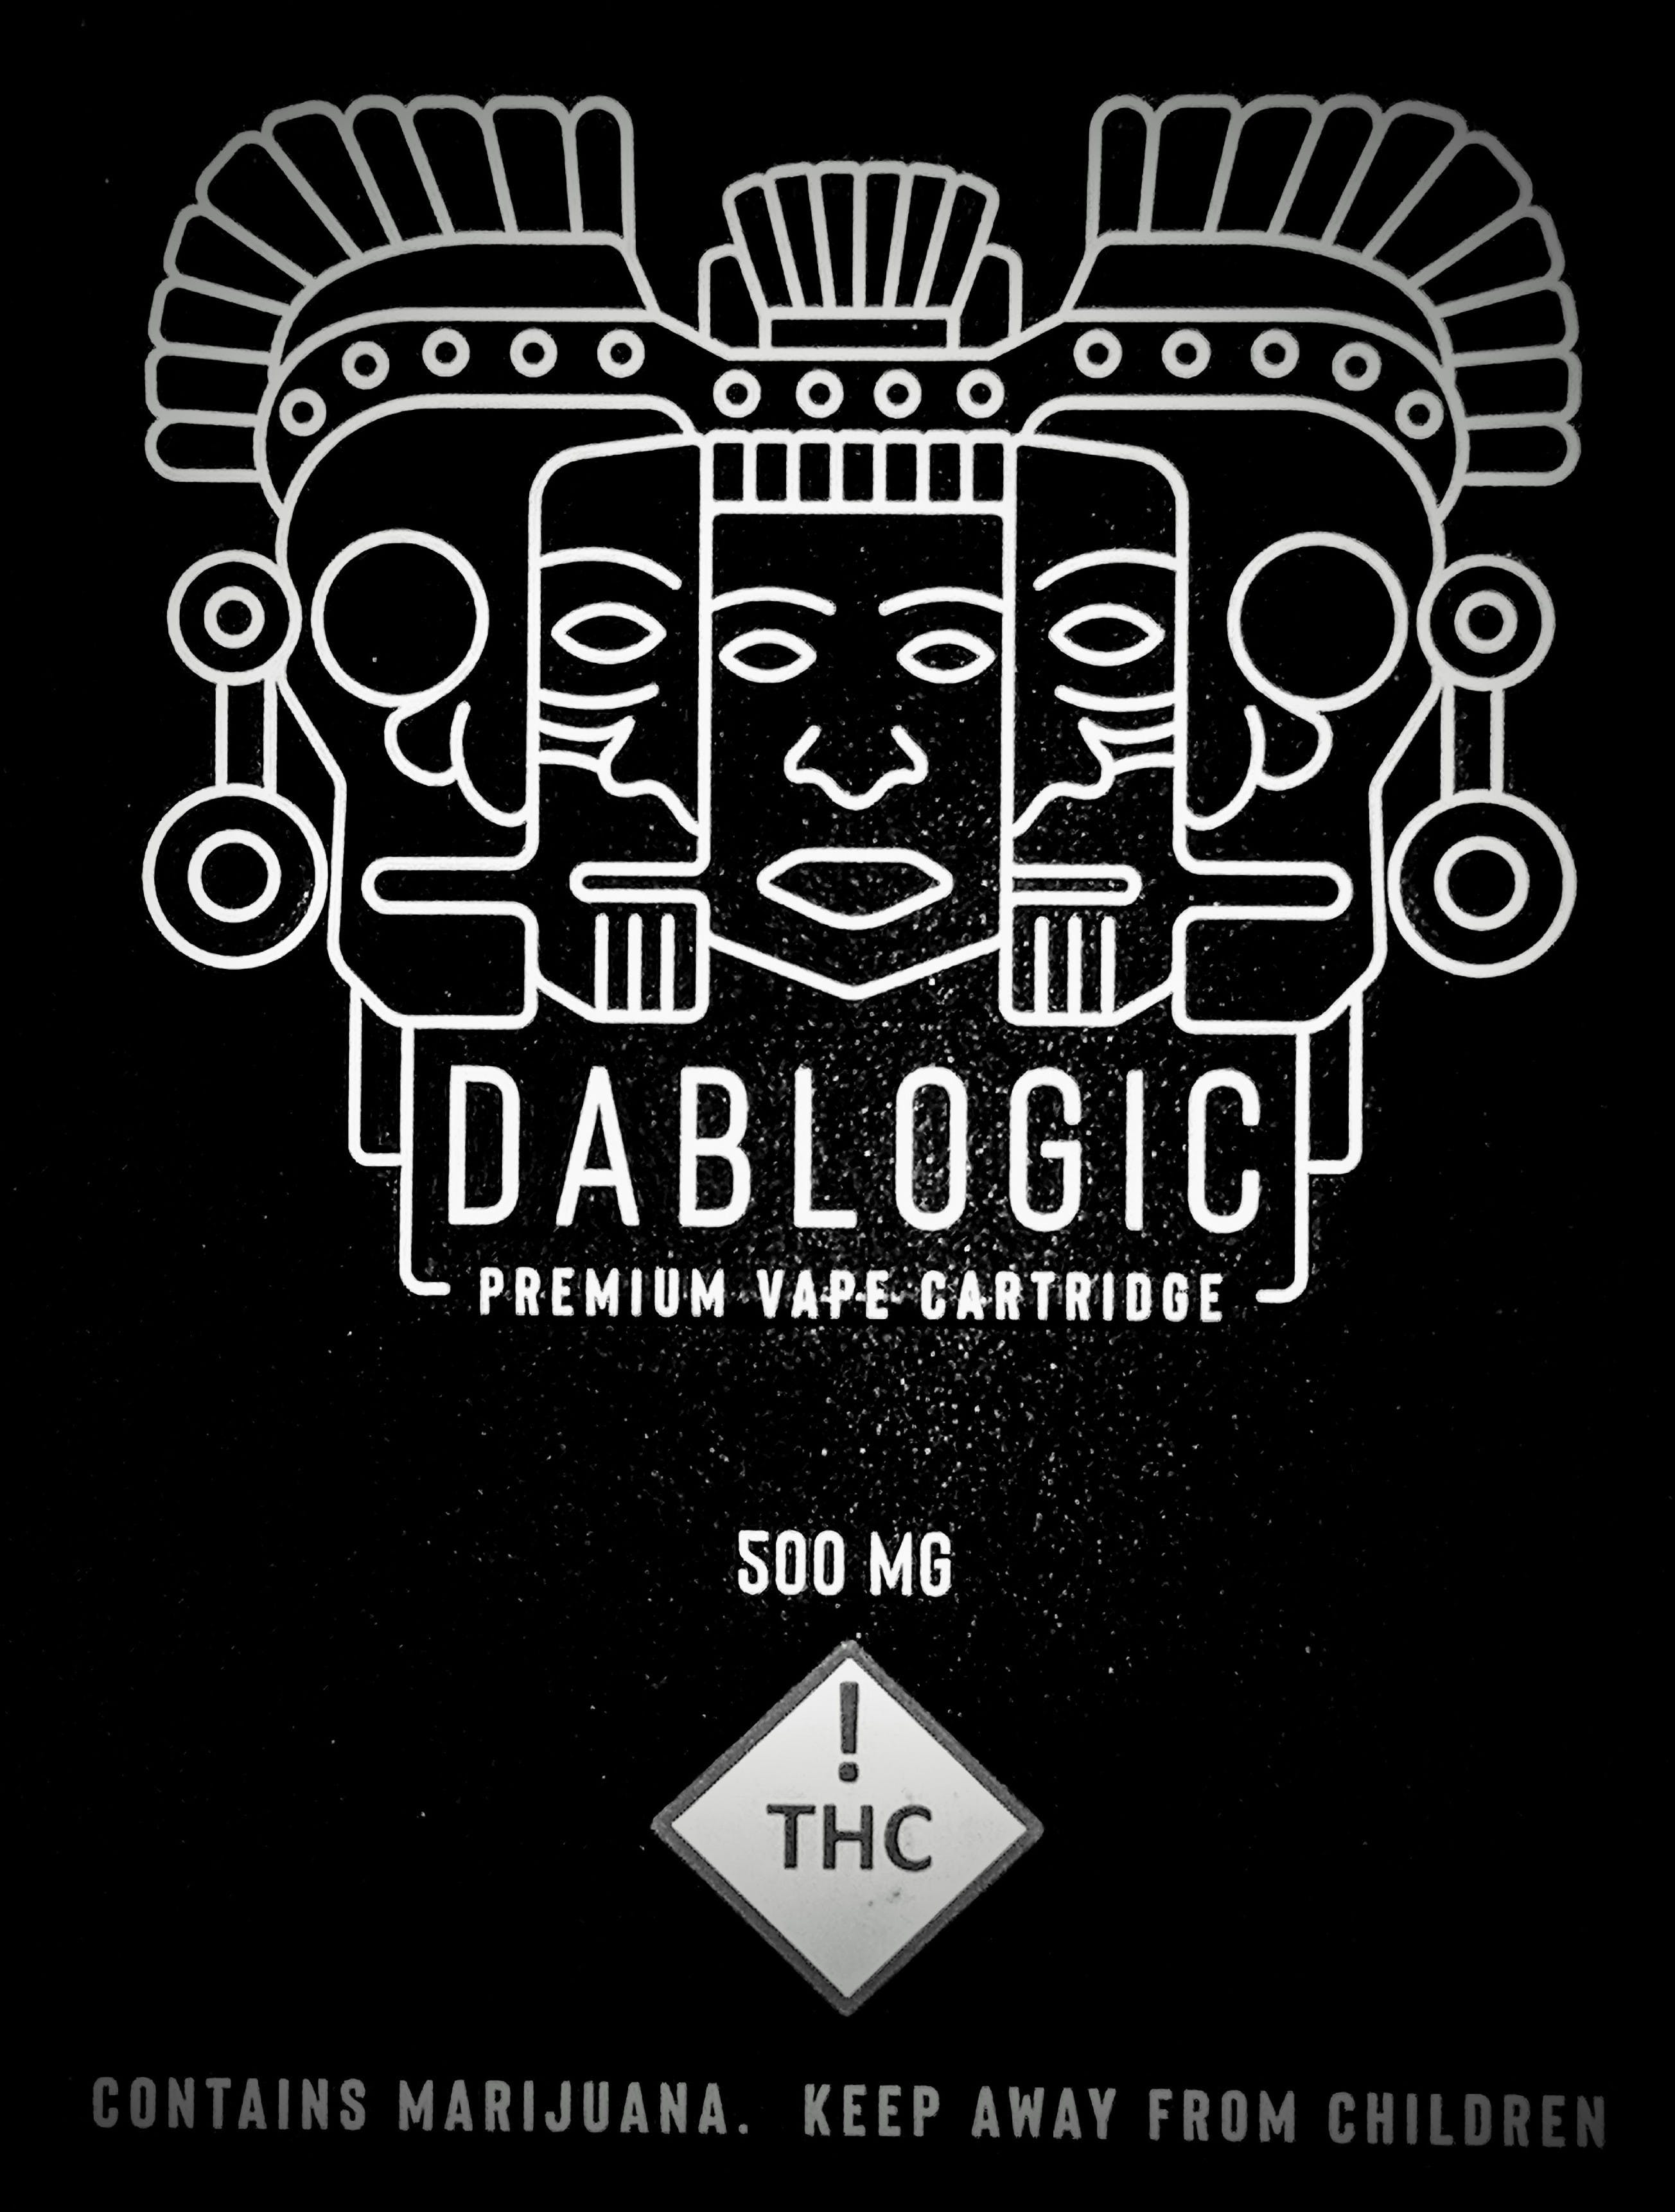 concentrate-dablogic-vape-cartridges-new-product-21